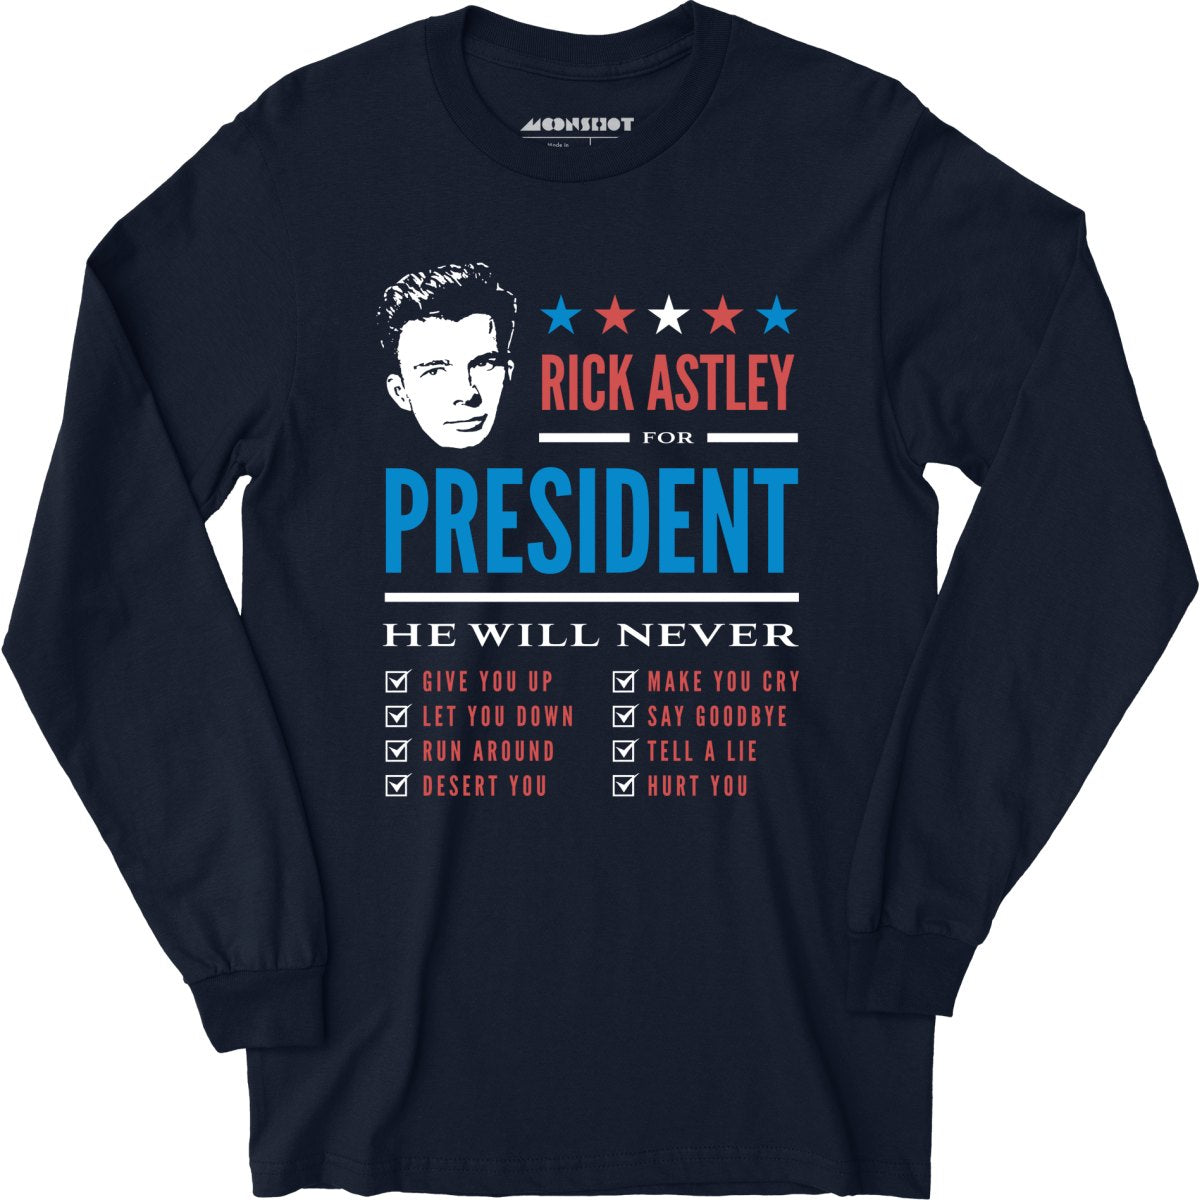 Rick Astley for President - Long Sleeve T-Shirt